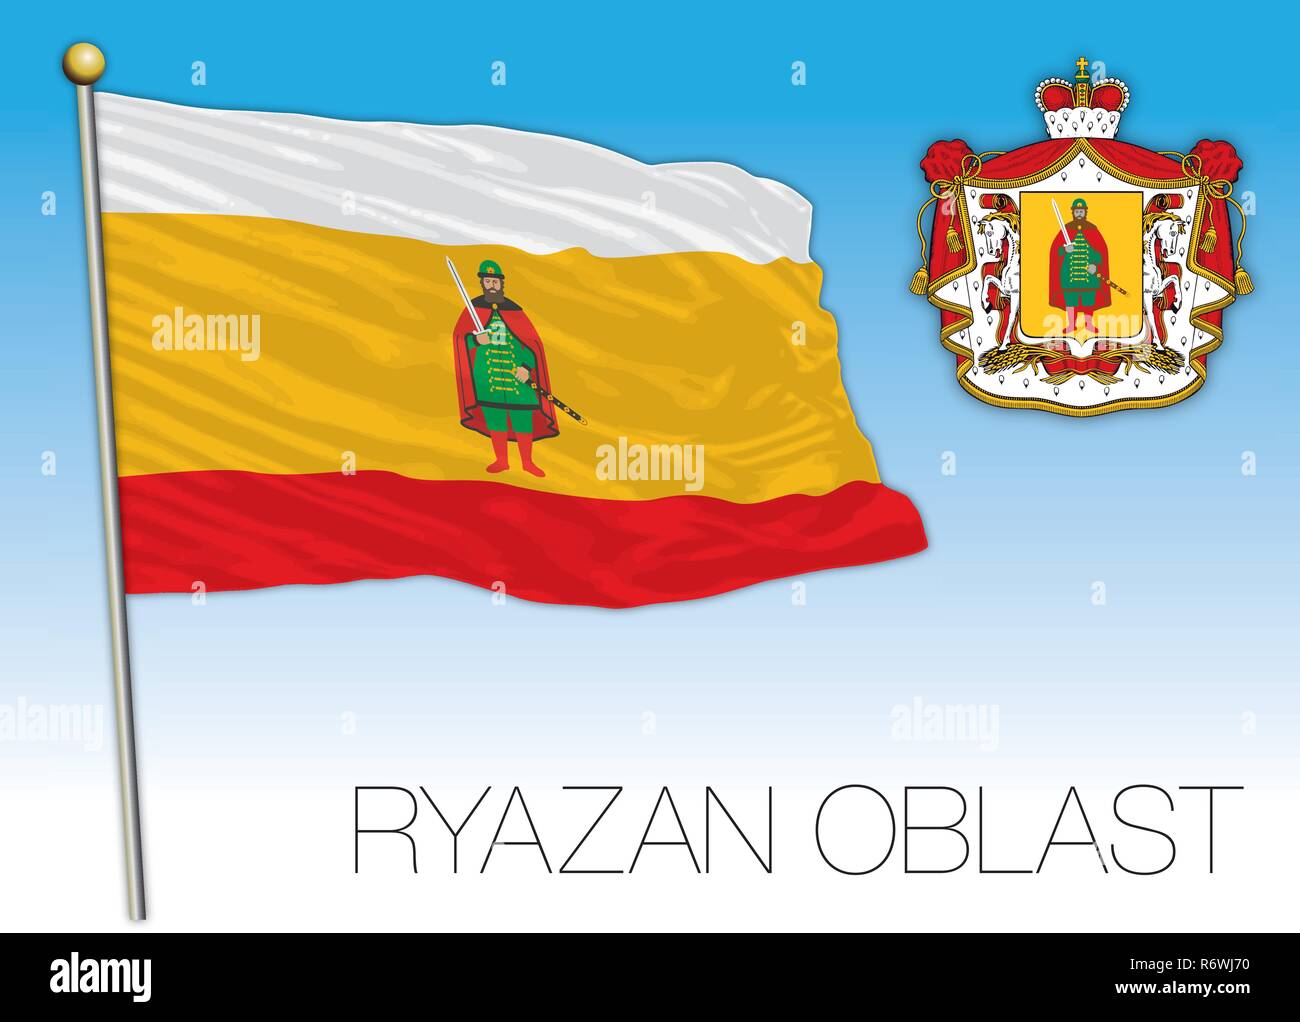 Ryazan oblast flag, Russian Federation, vector illustration Stock Vector